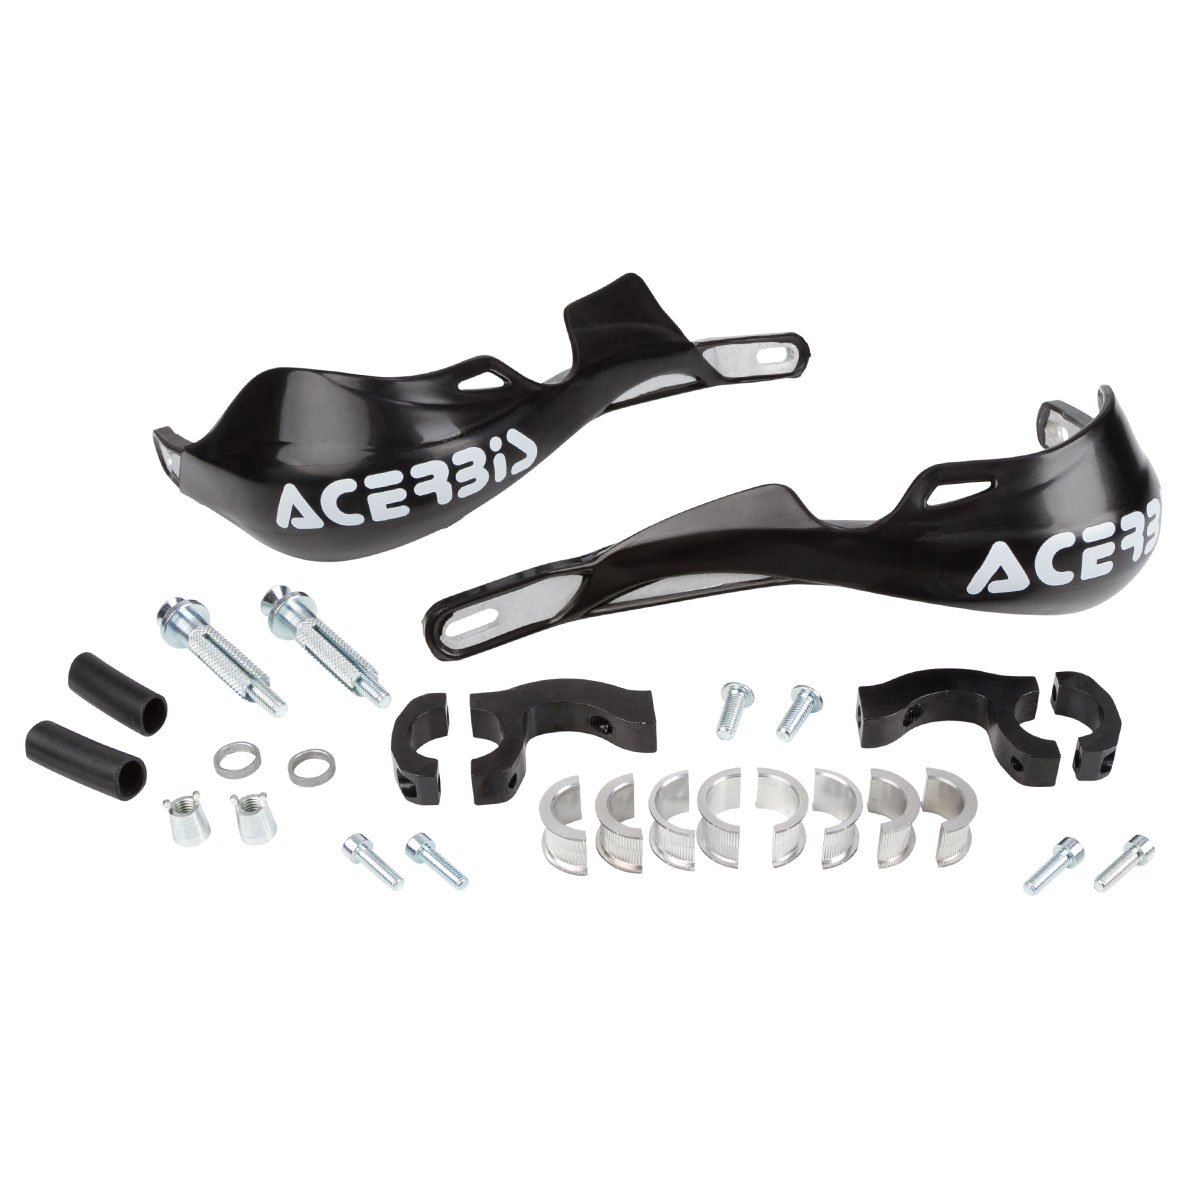 Acerbis Handguards Mounting/Fitting Kit All Handlebars Rally Pro/11/Multiplo 